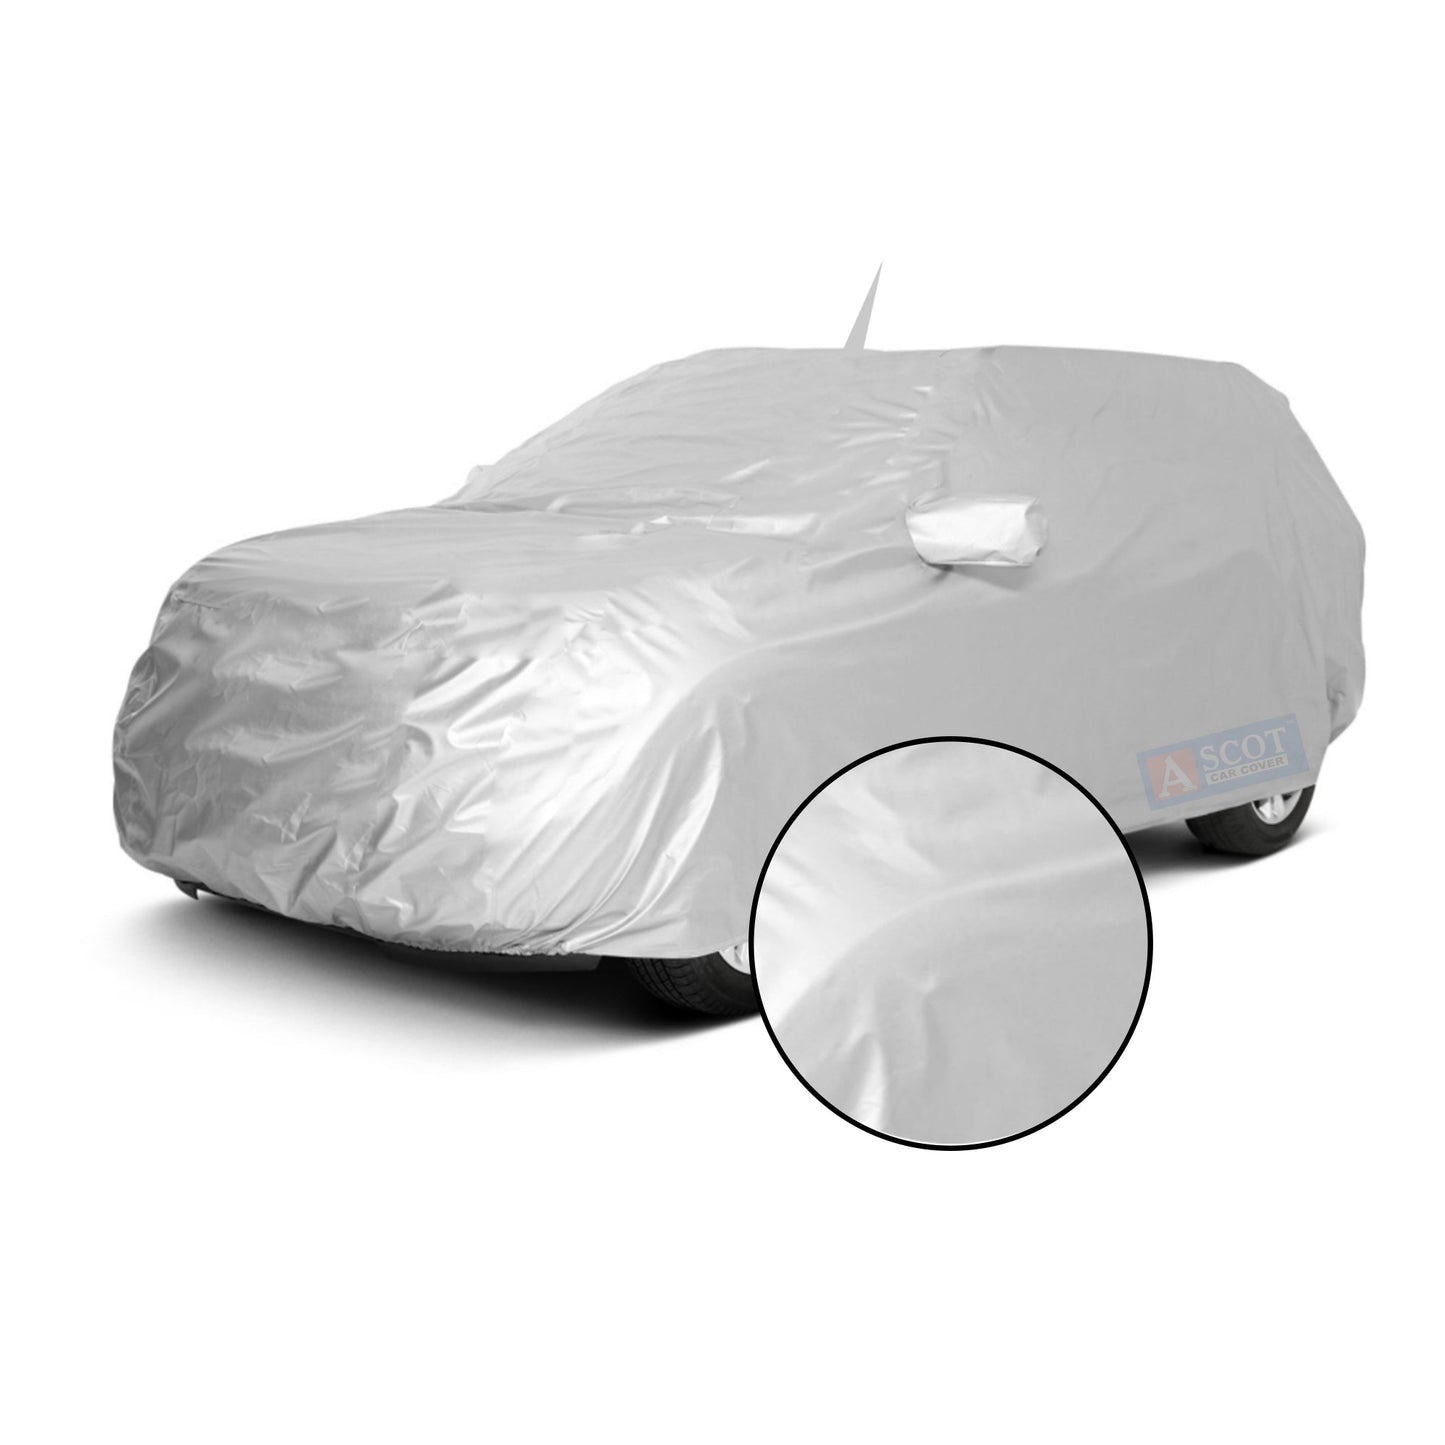 Ascot Maruti Suzuki Dzire 2008-2012 Model Car Body Cover Dust Proof, Trippel Stitched